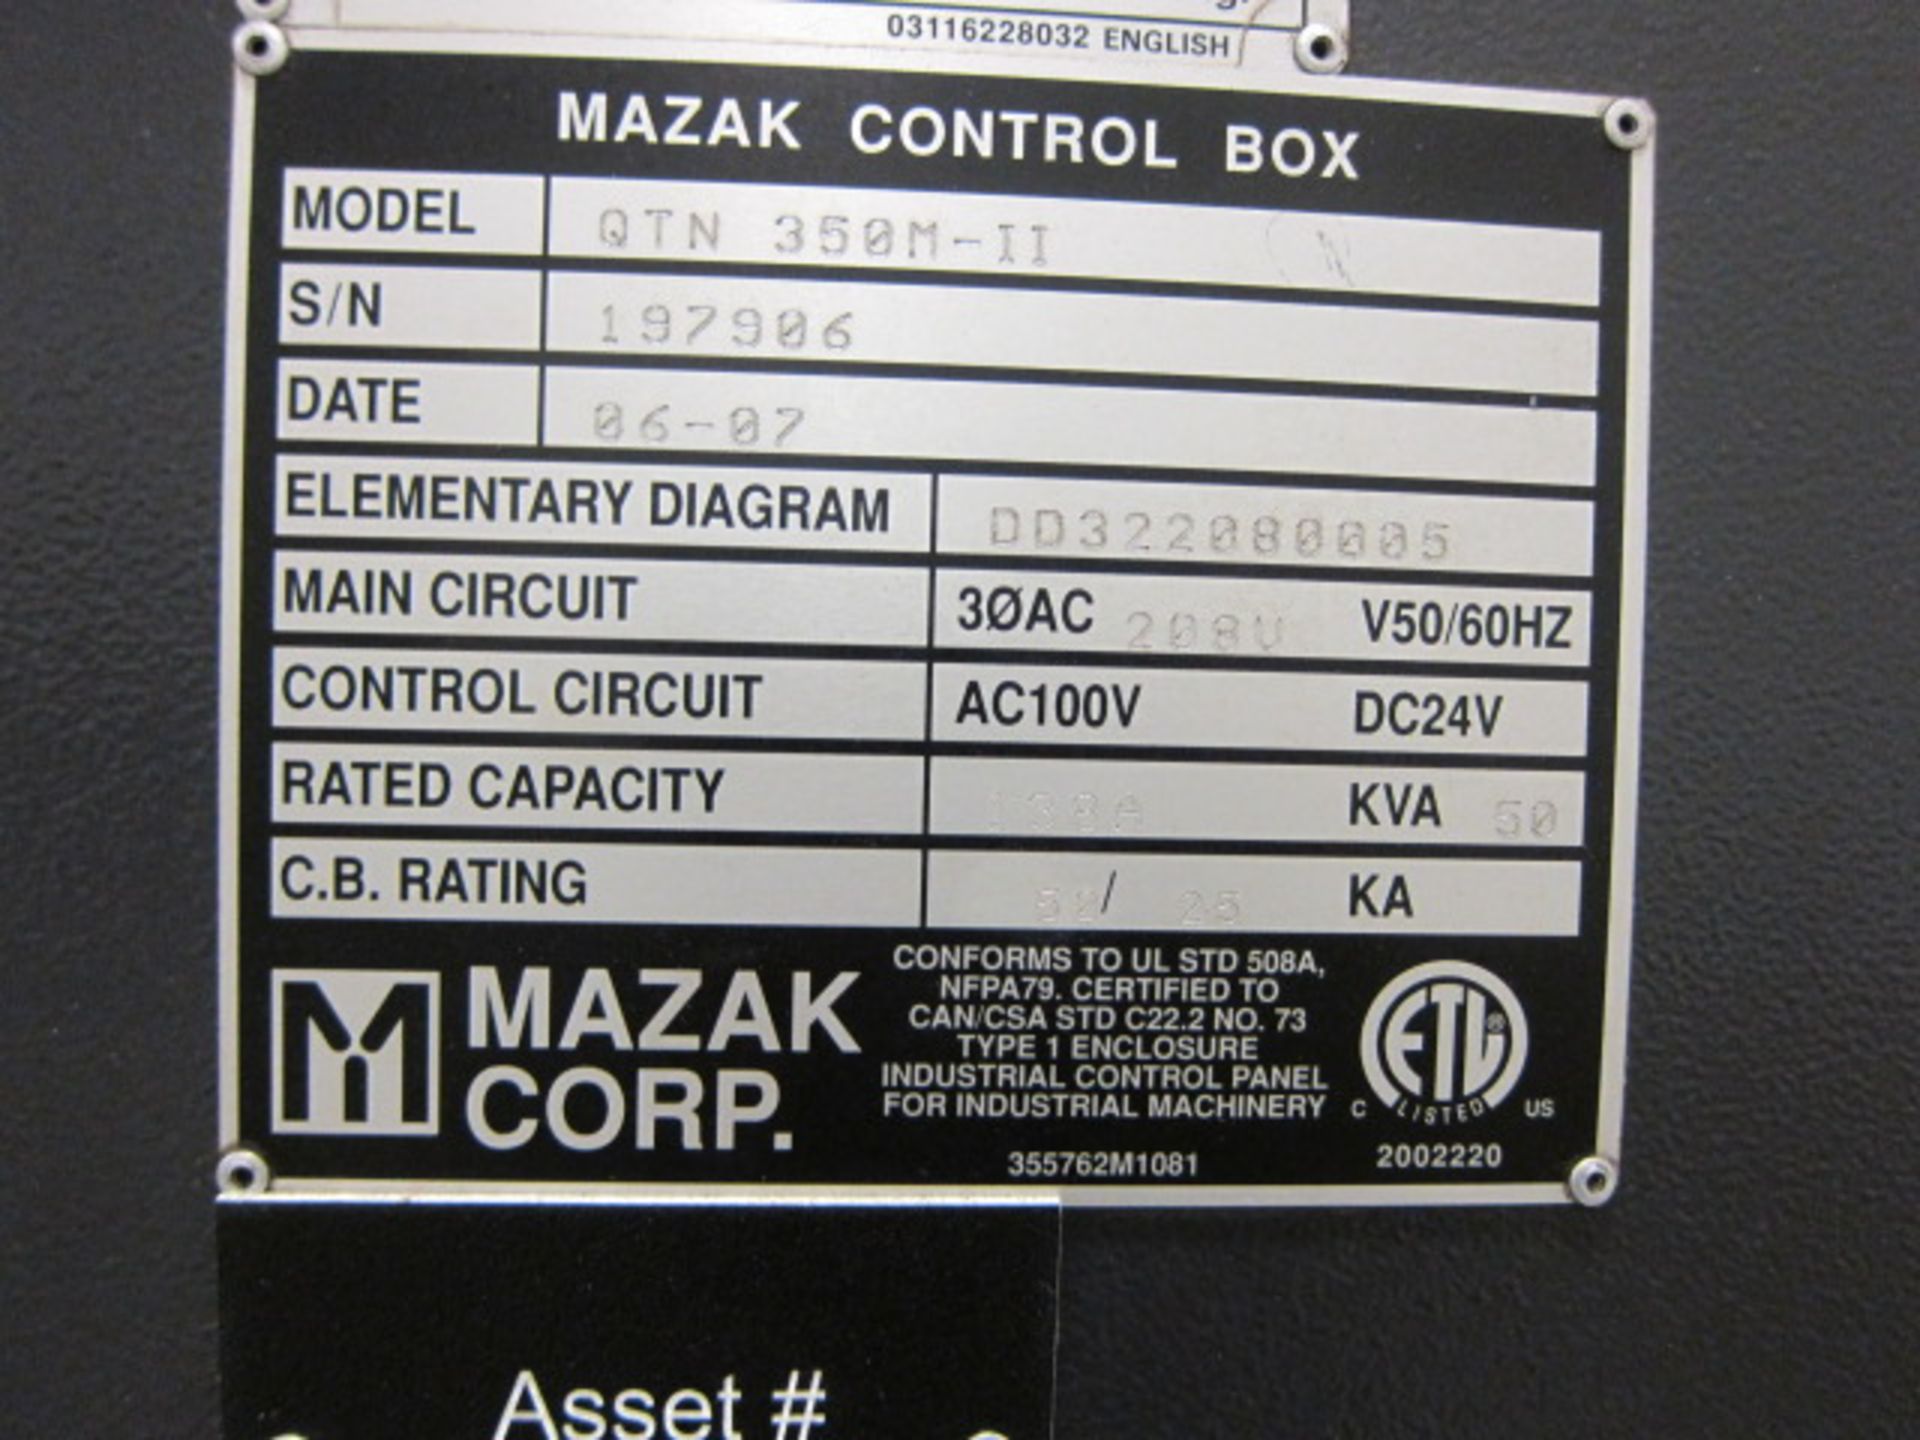 MULTI-AXIS CNC LATHE, MAZAK QUICKTURN NEXUS MDL. 350-IIM, new 6/2007, Mazatrol Matrix CNC control, - Image 7 of 7